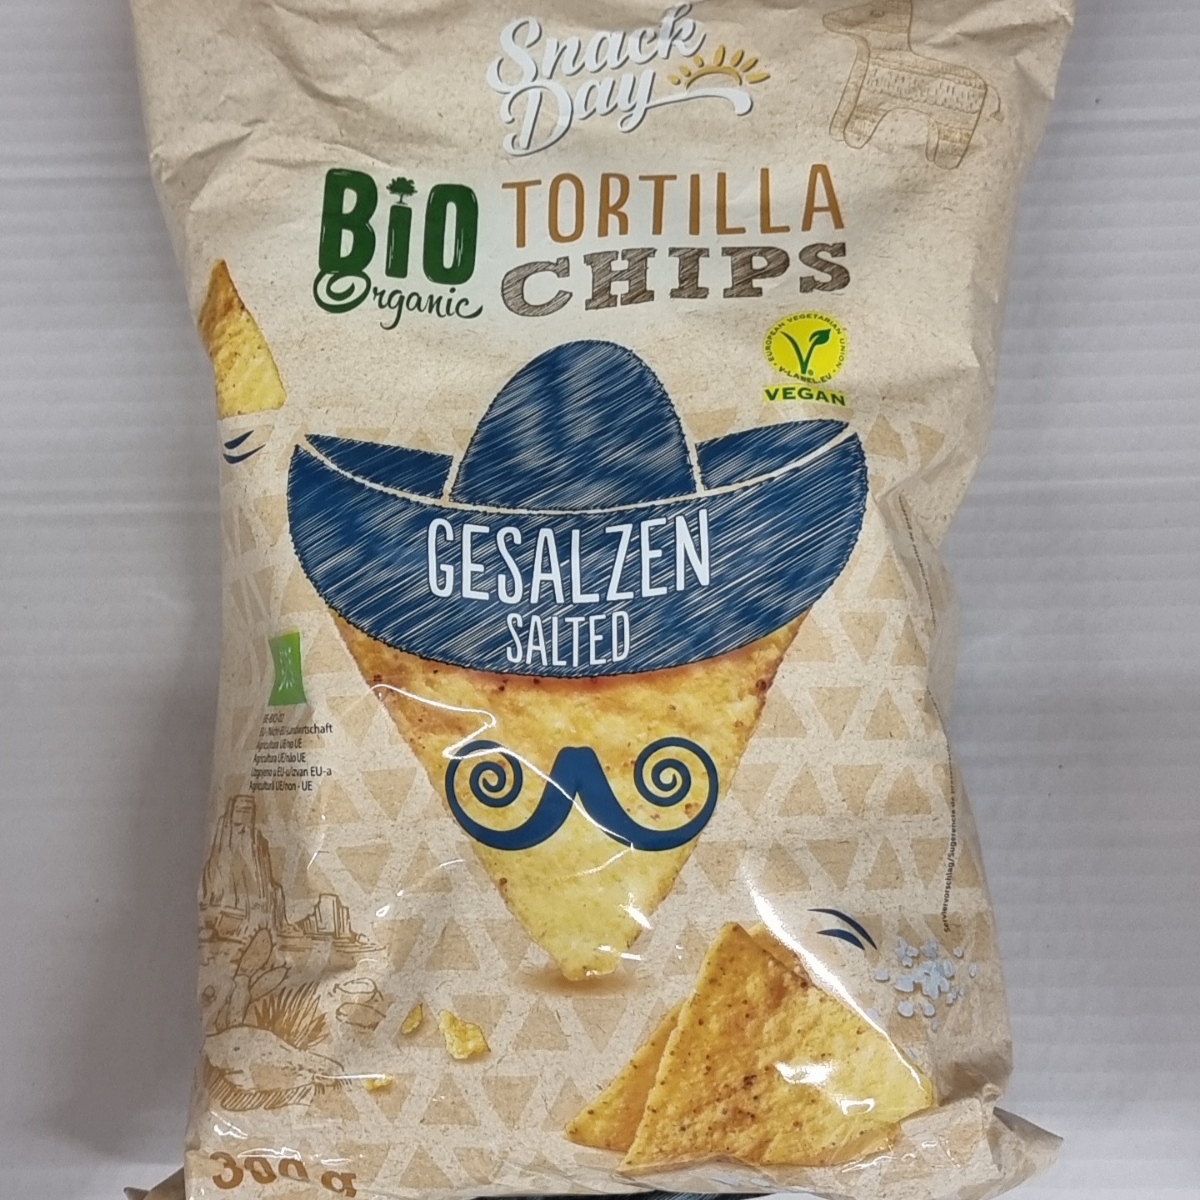 Snack Day Bio Tortilla Chips Review abillion | gesalzen